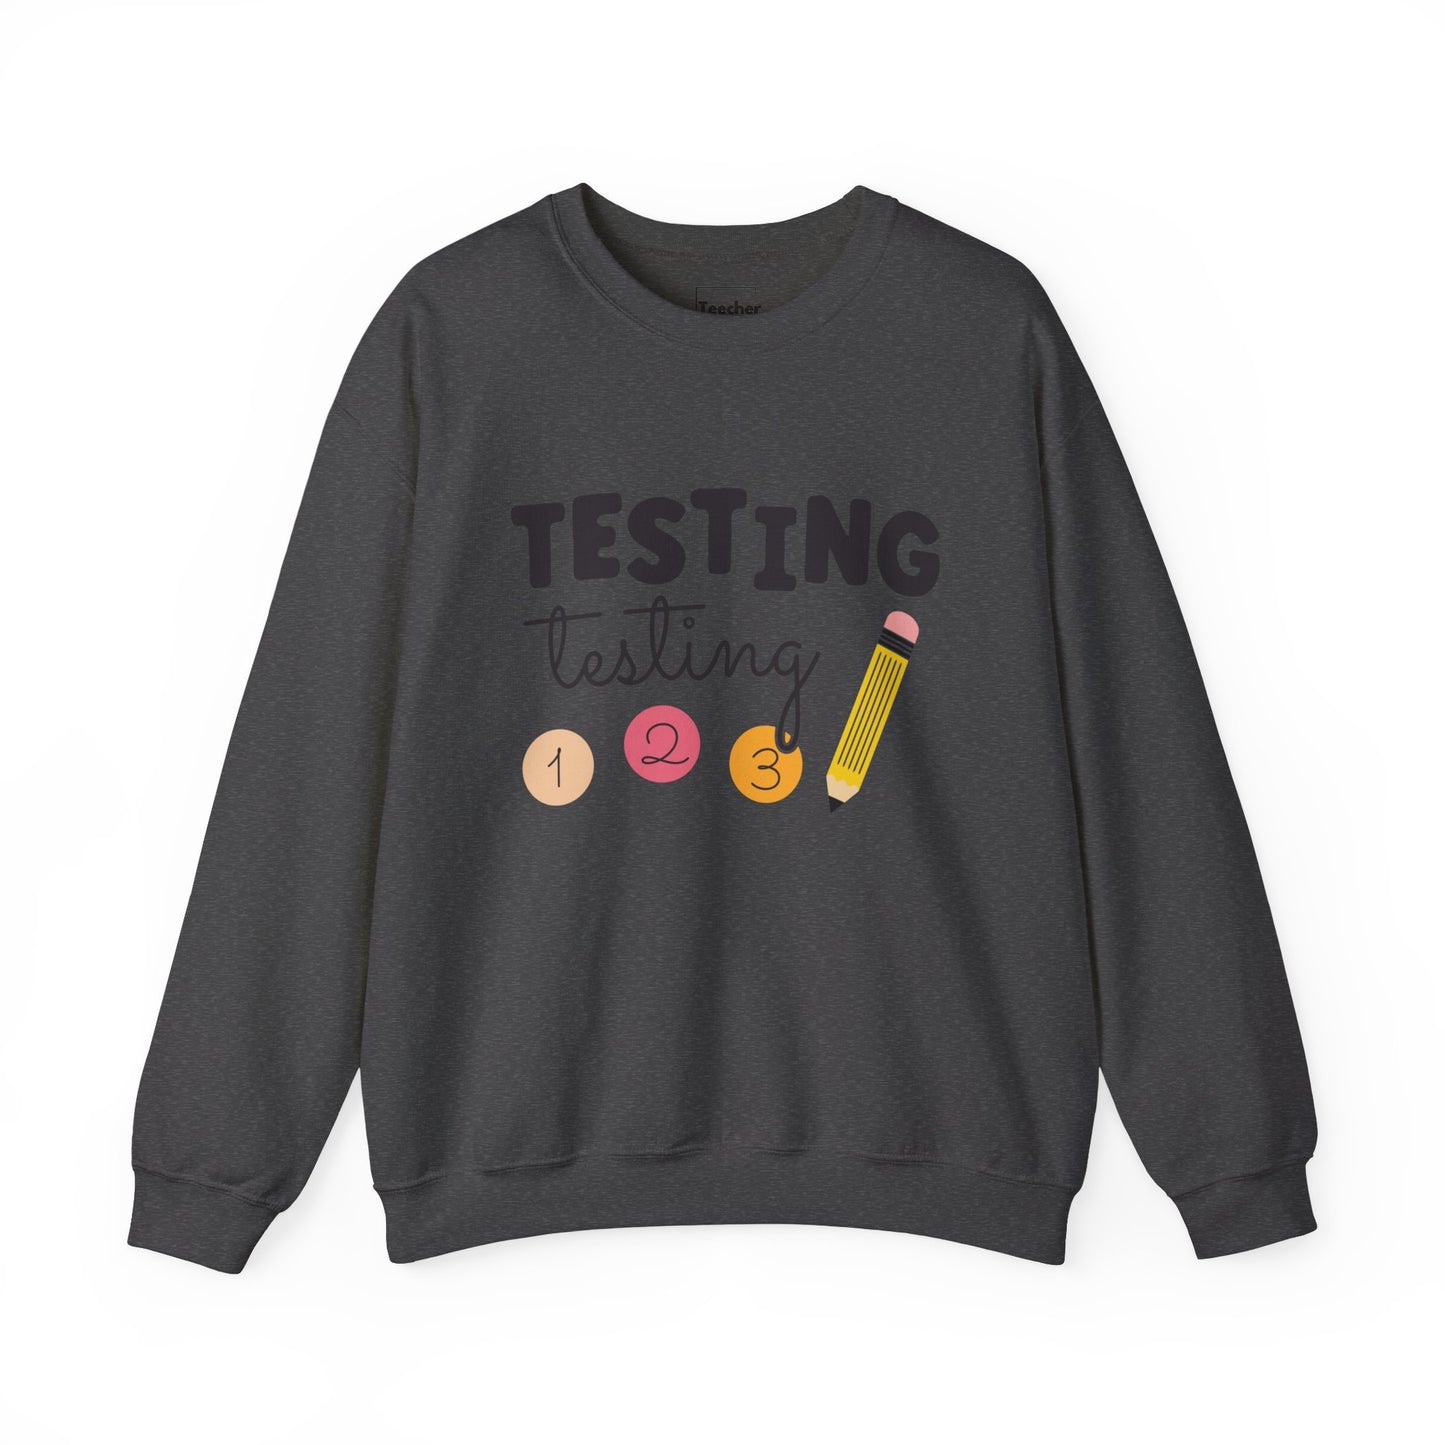 Testing Testing Sweatshirt